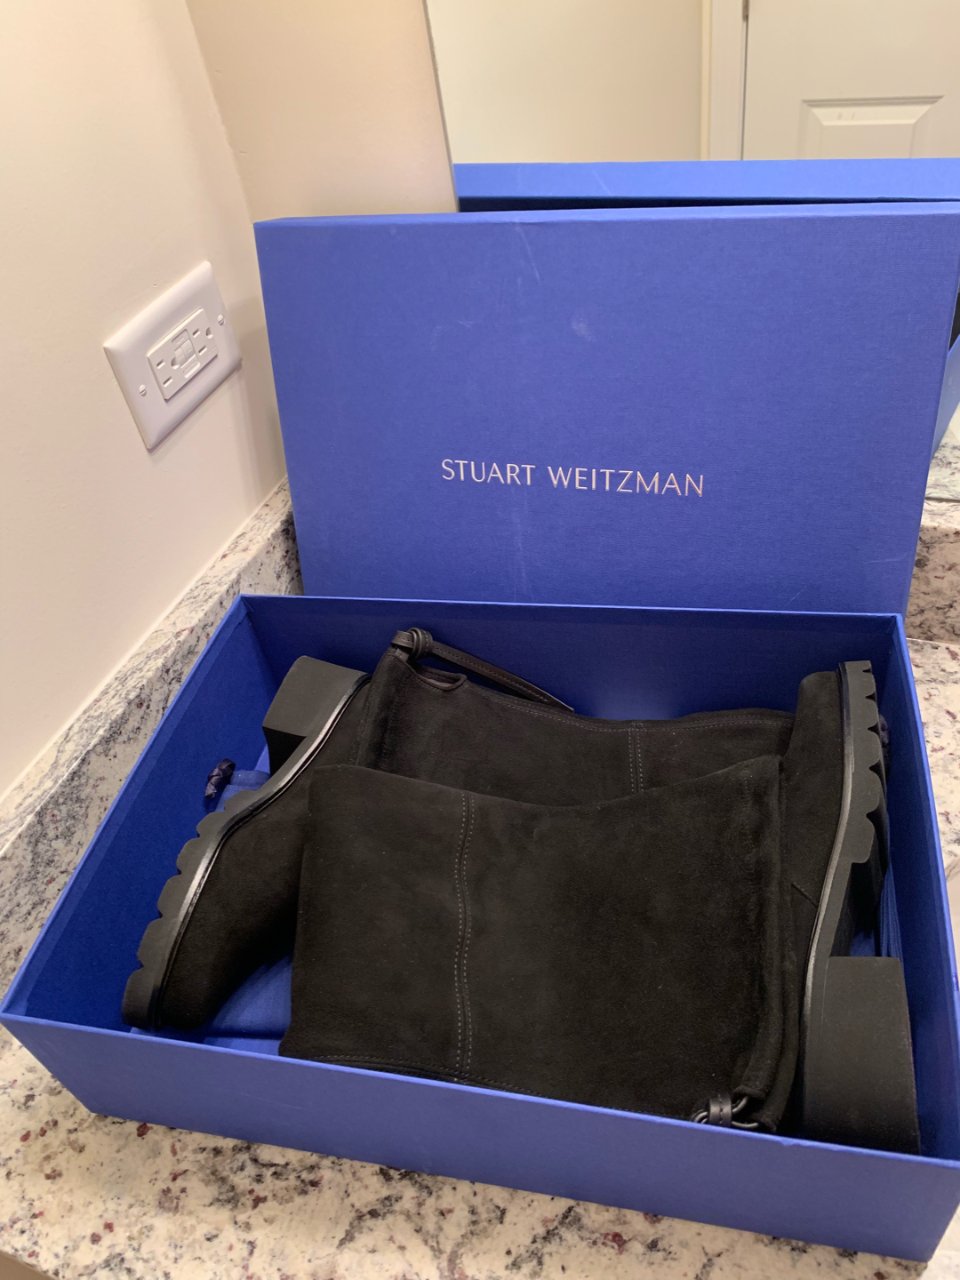 Stuart Weitzman 斯图尔特·韦茨曼,Nordstrom rack $249.99